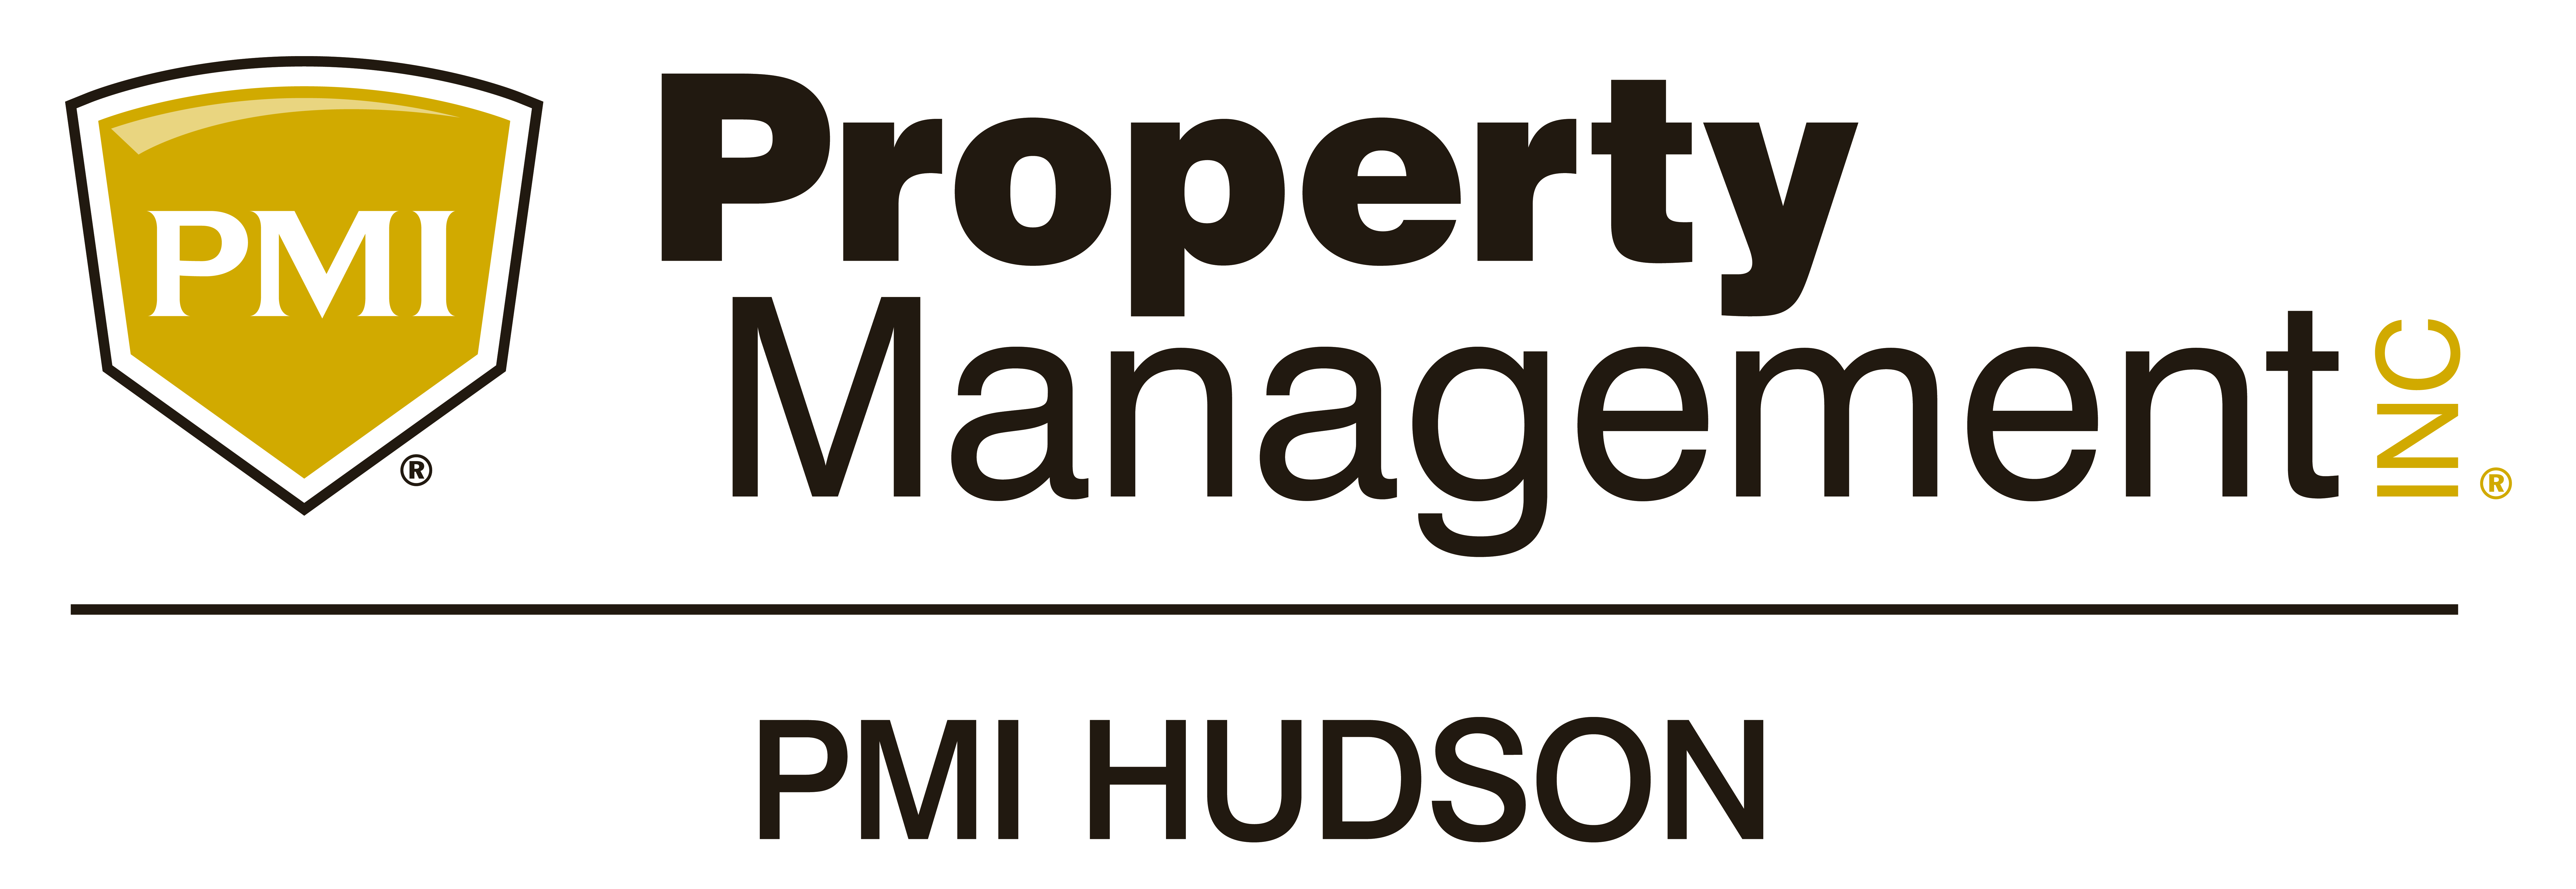 PMI Hudson Property Management Associations logo